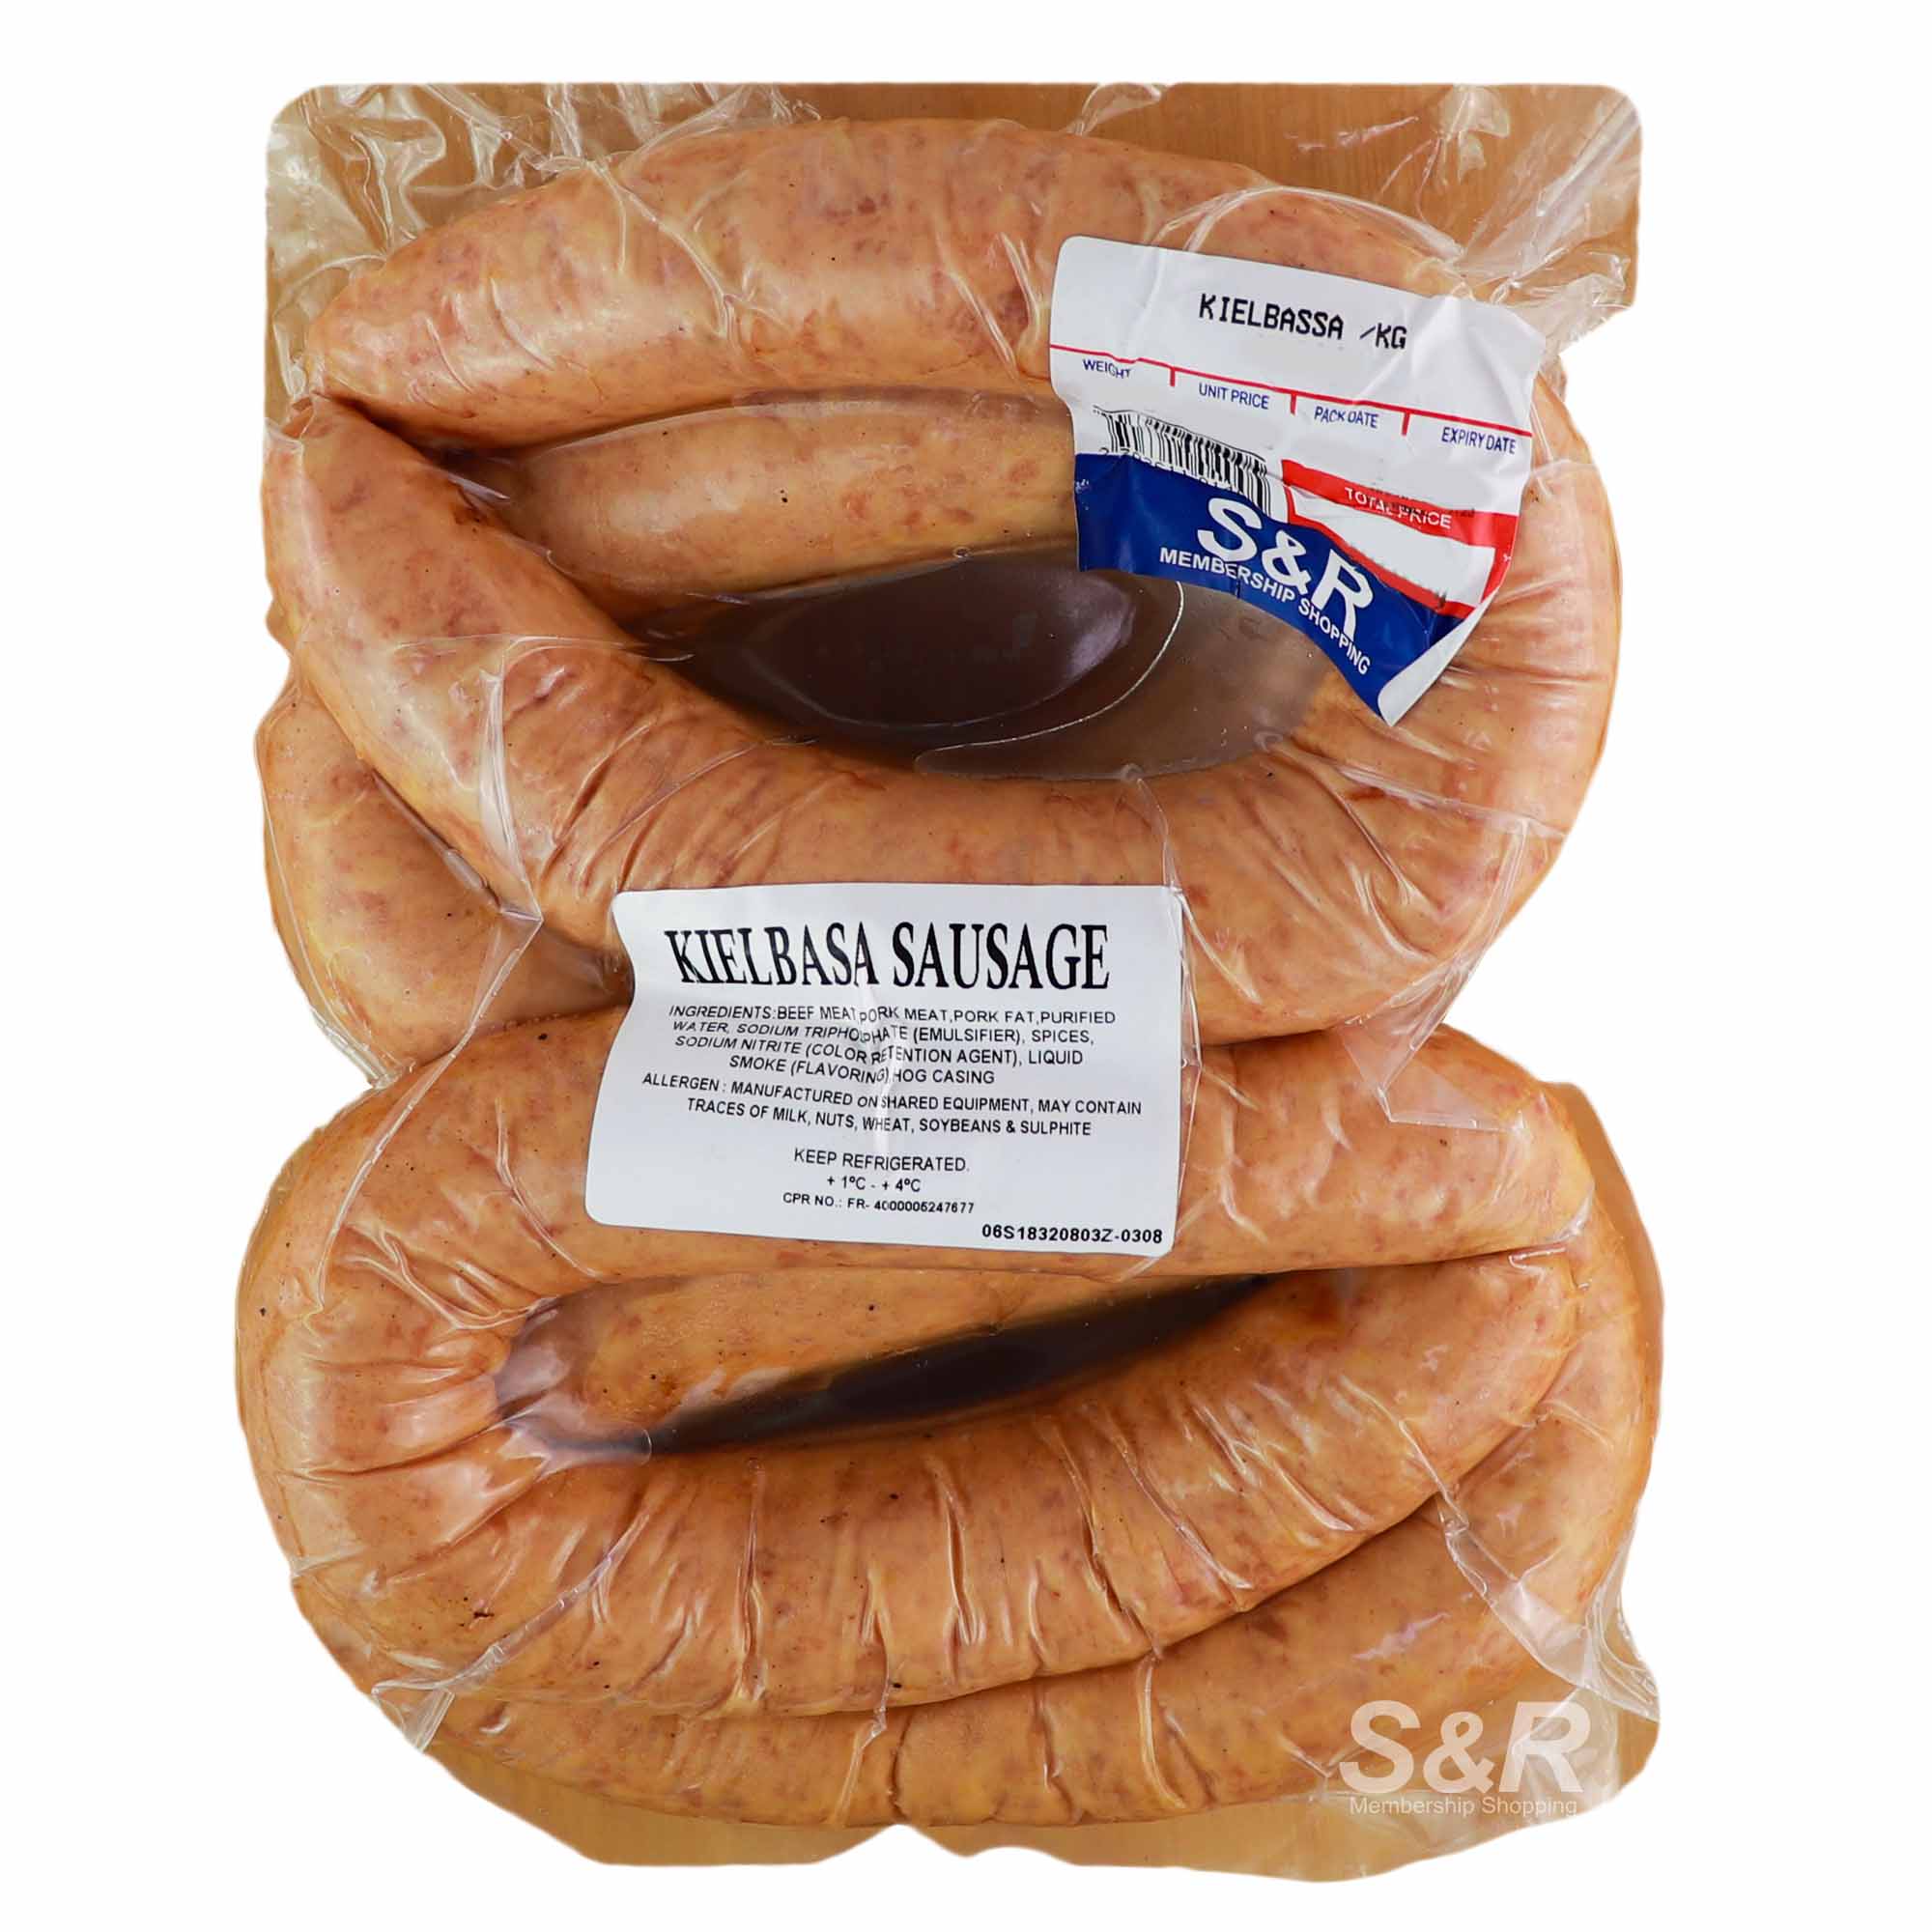 Member's Value Kielbasa Sausage approx. 700g